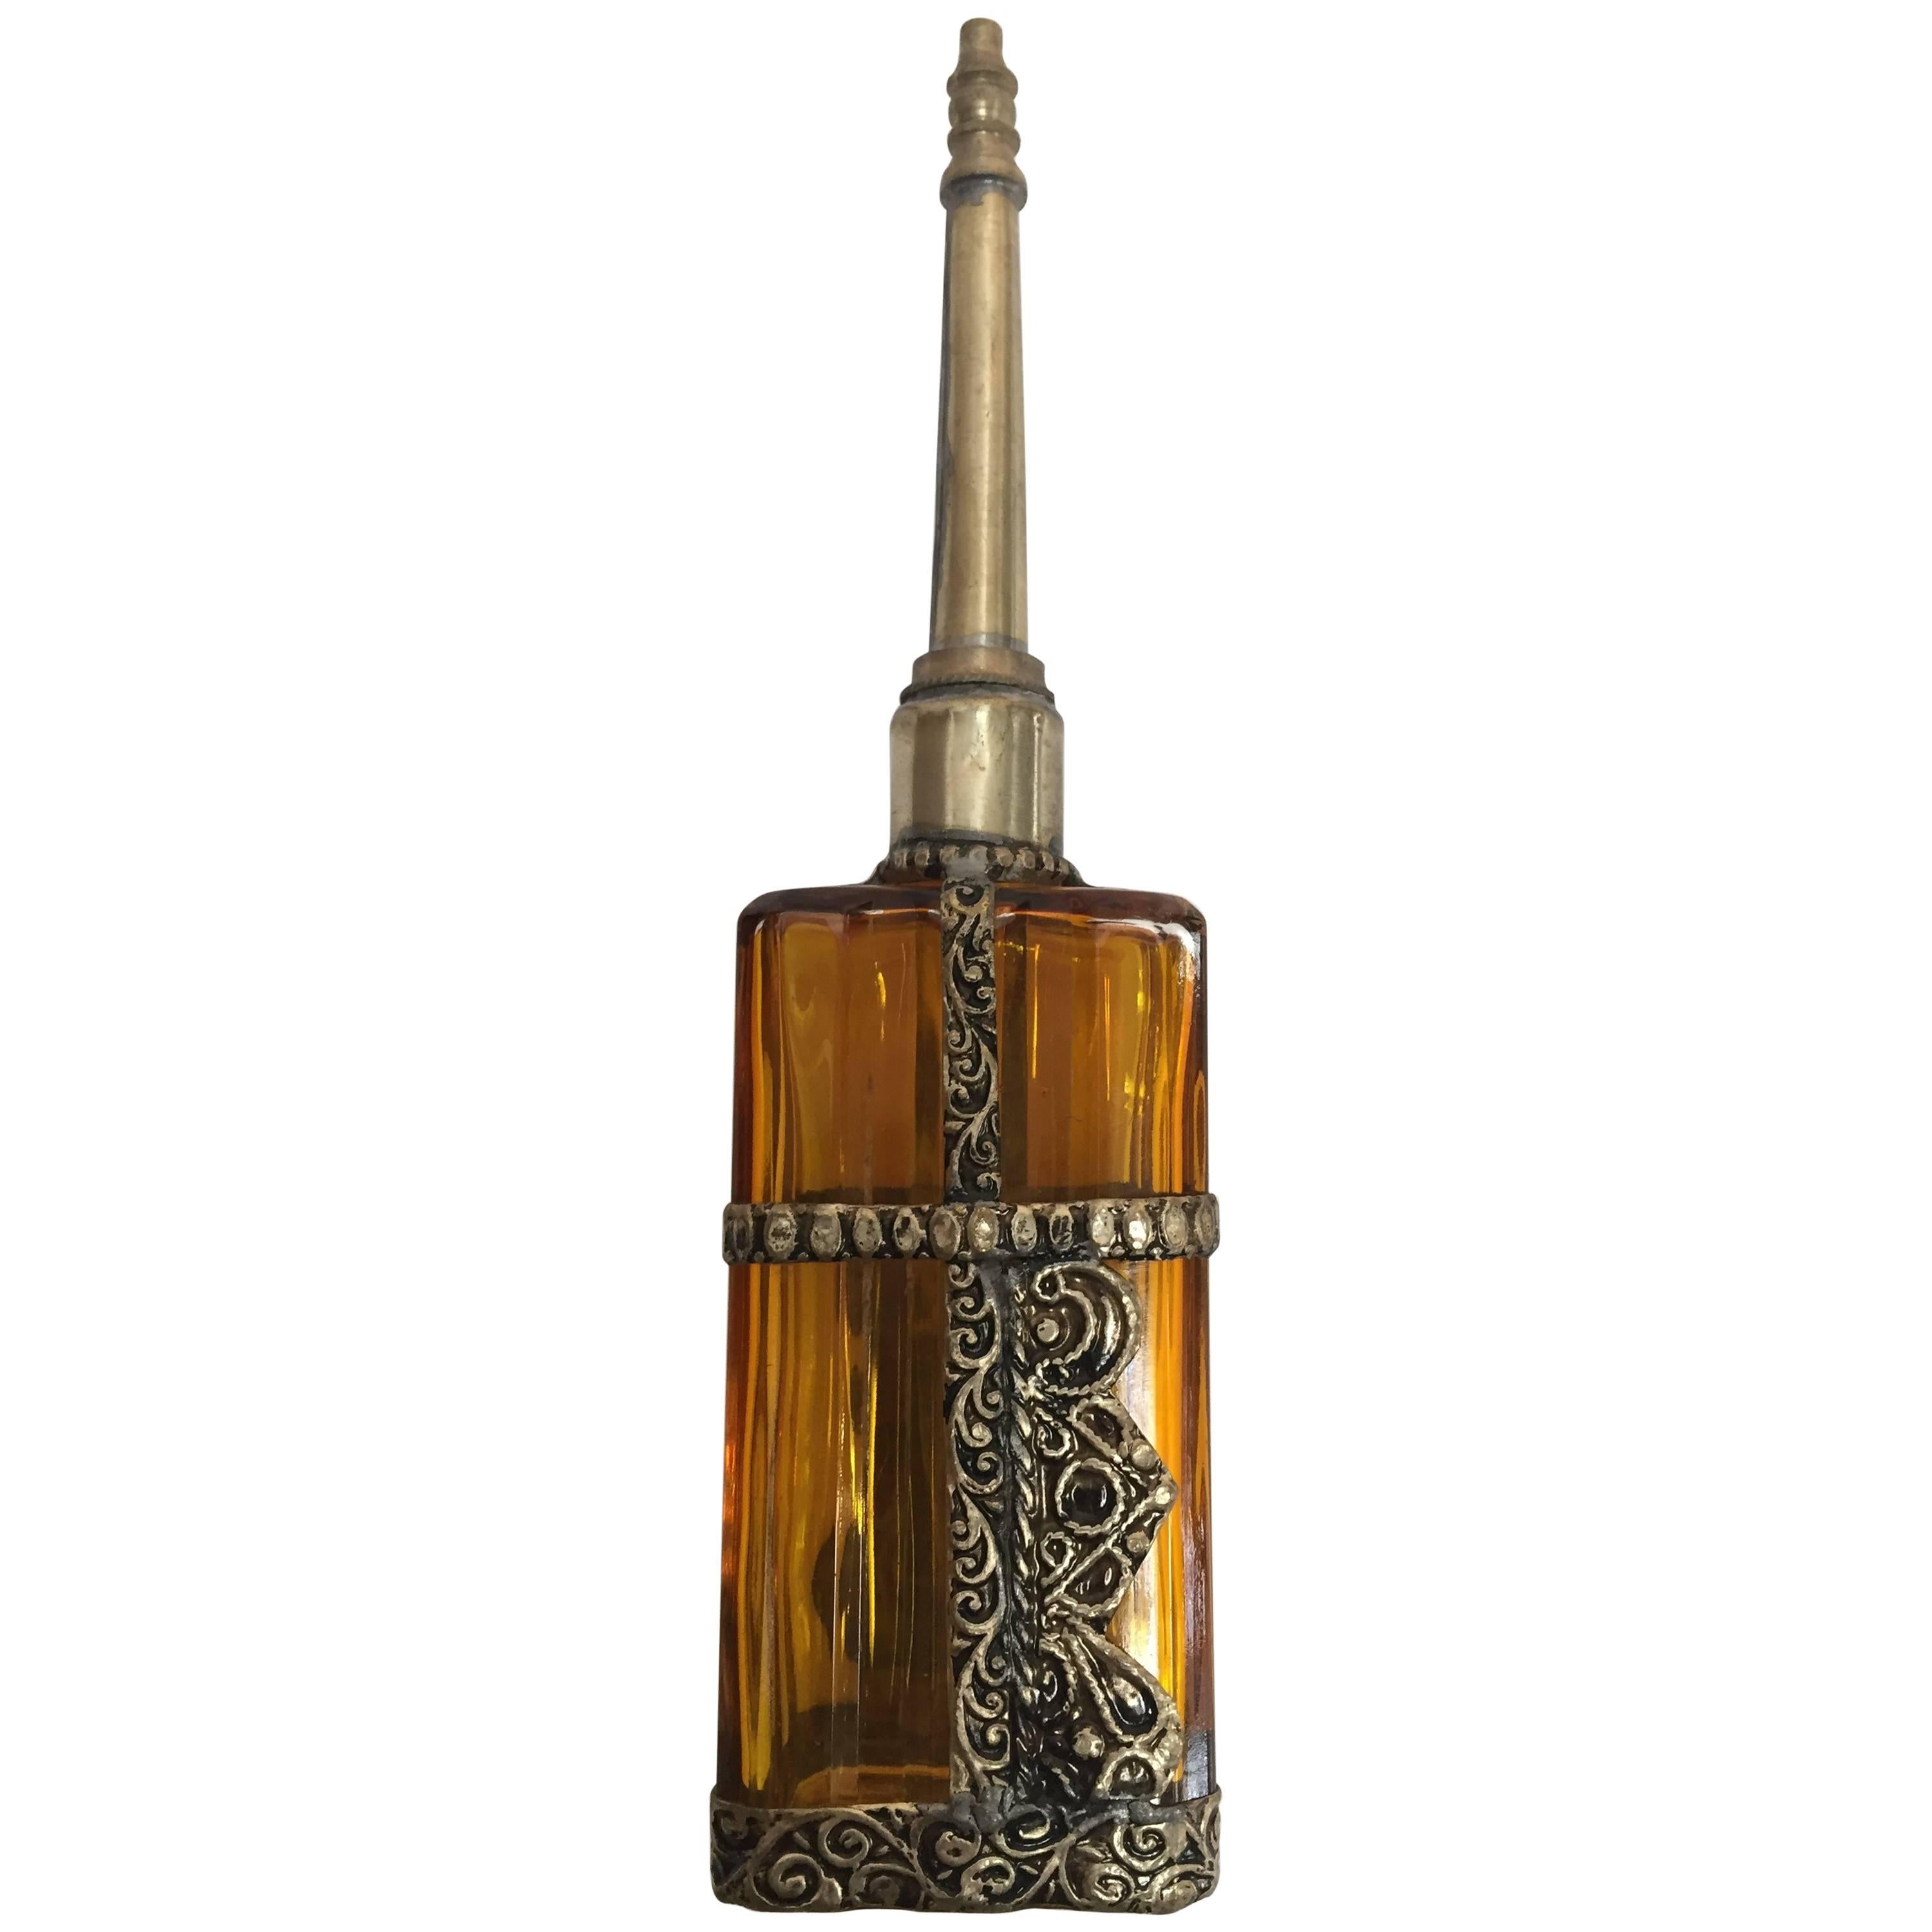 Moroccan Perfume Sprinkler with Embossed Silvered Metal Design Overlay